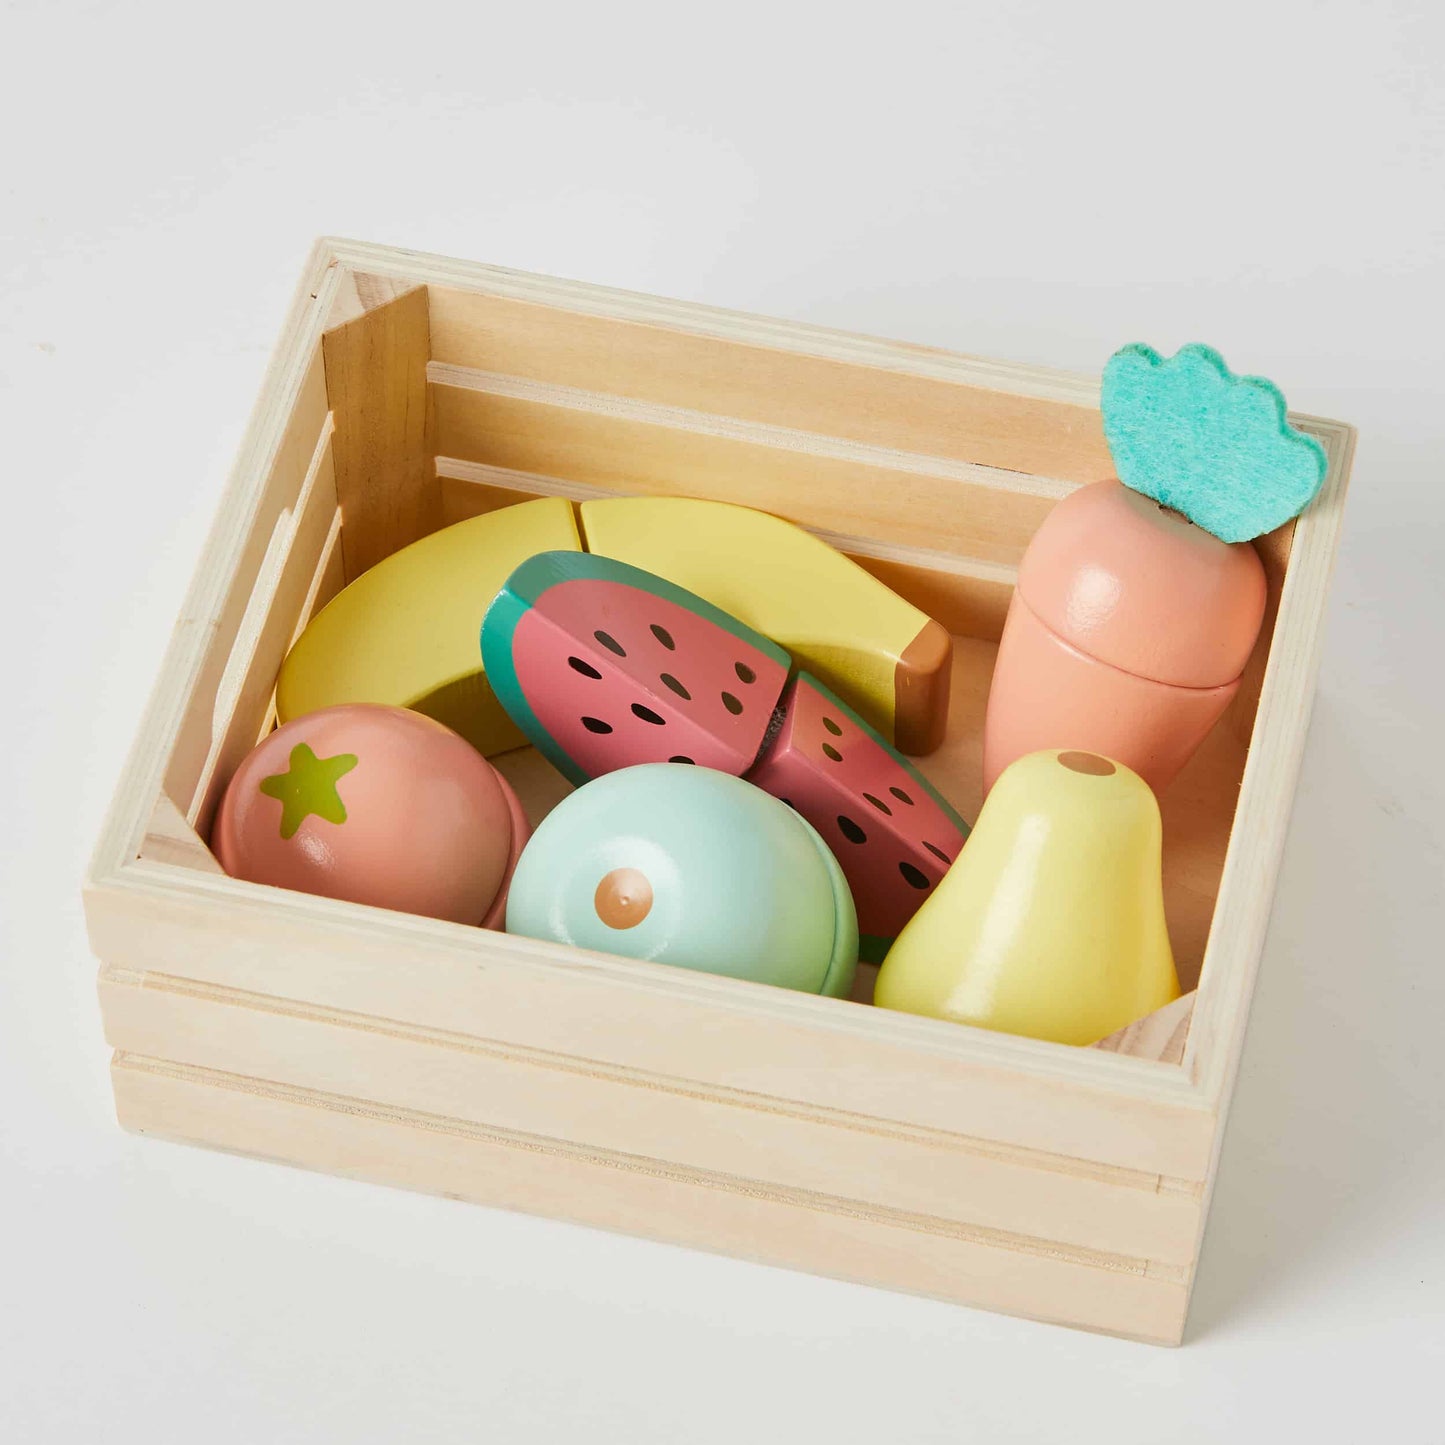 Wooden Fruit Play Set